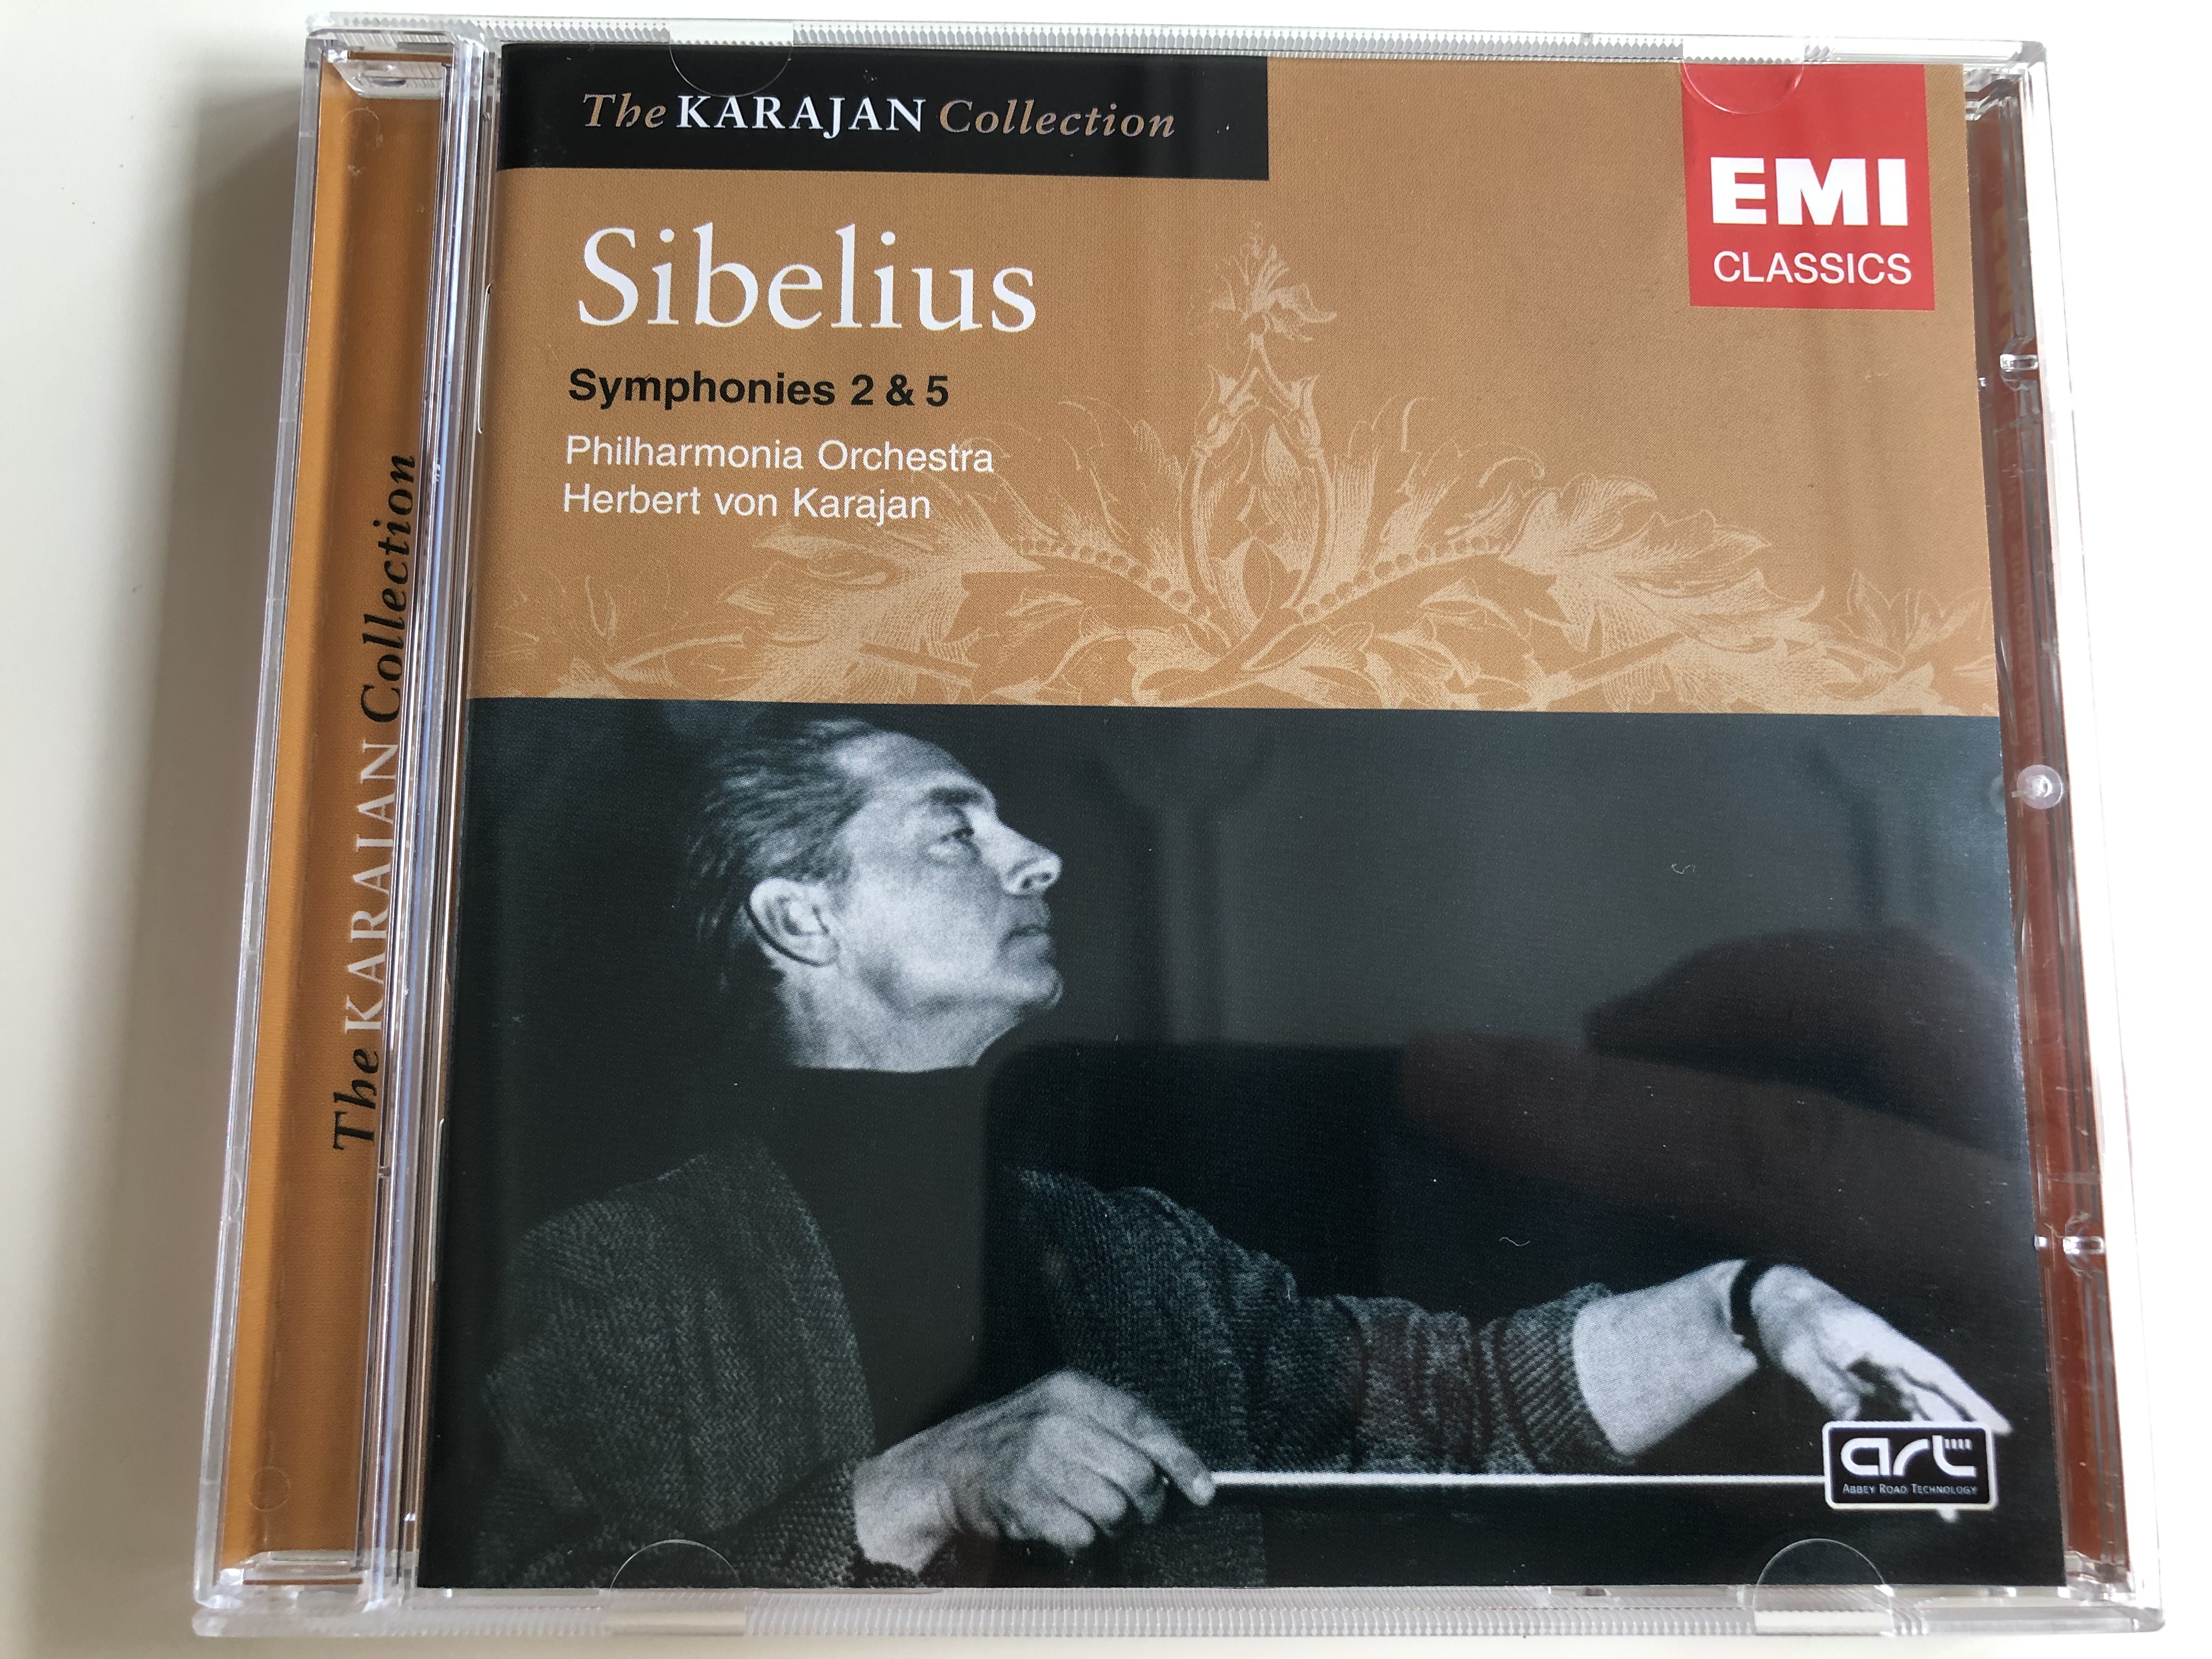 jean-sibelius-symphonies-2-5-the-karajan-collection-philharmonia-orchestra-conducted-by-herbert-von-karajan-audio-cd-1998-emi-classics-1-.jpg